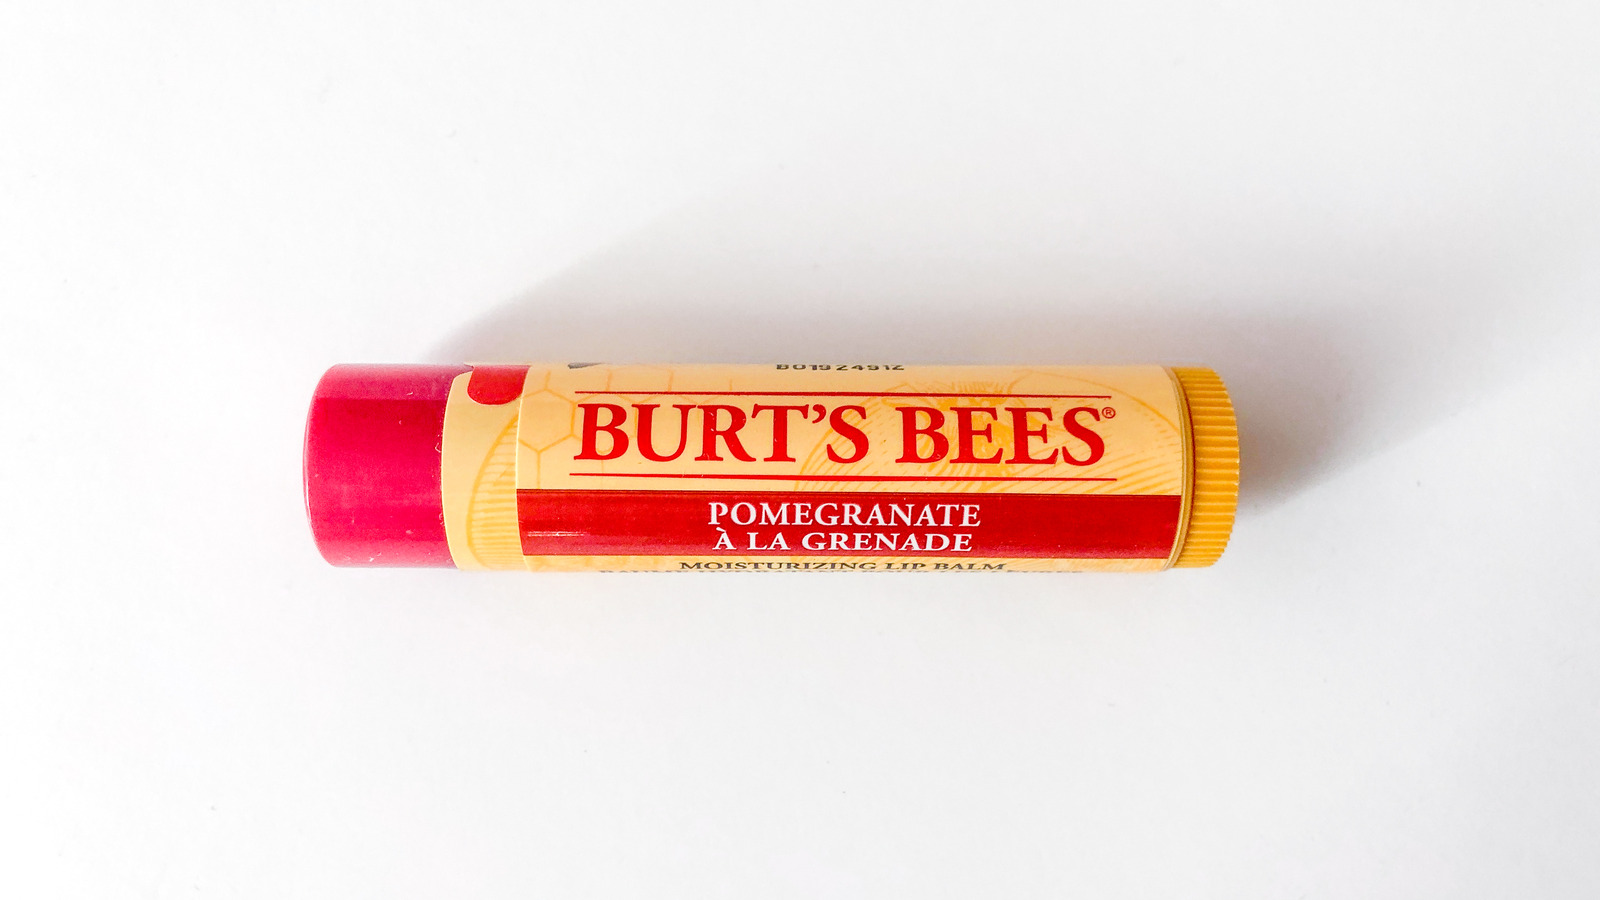 Burt's Bees Lip Balm: Keep Your Lips Healthy with Burt's Bees Lip Balms